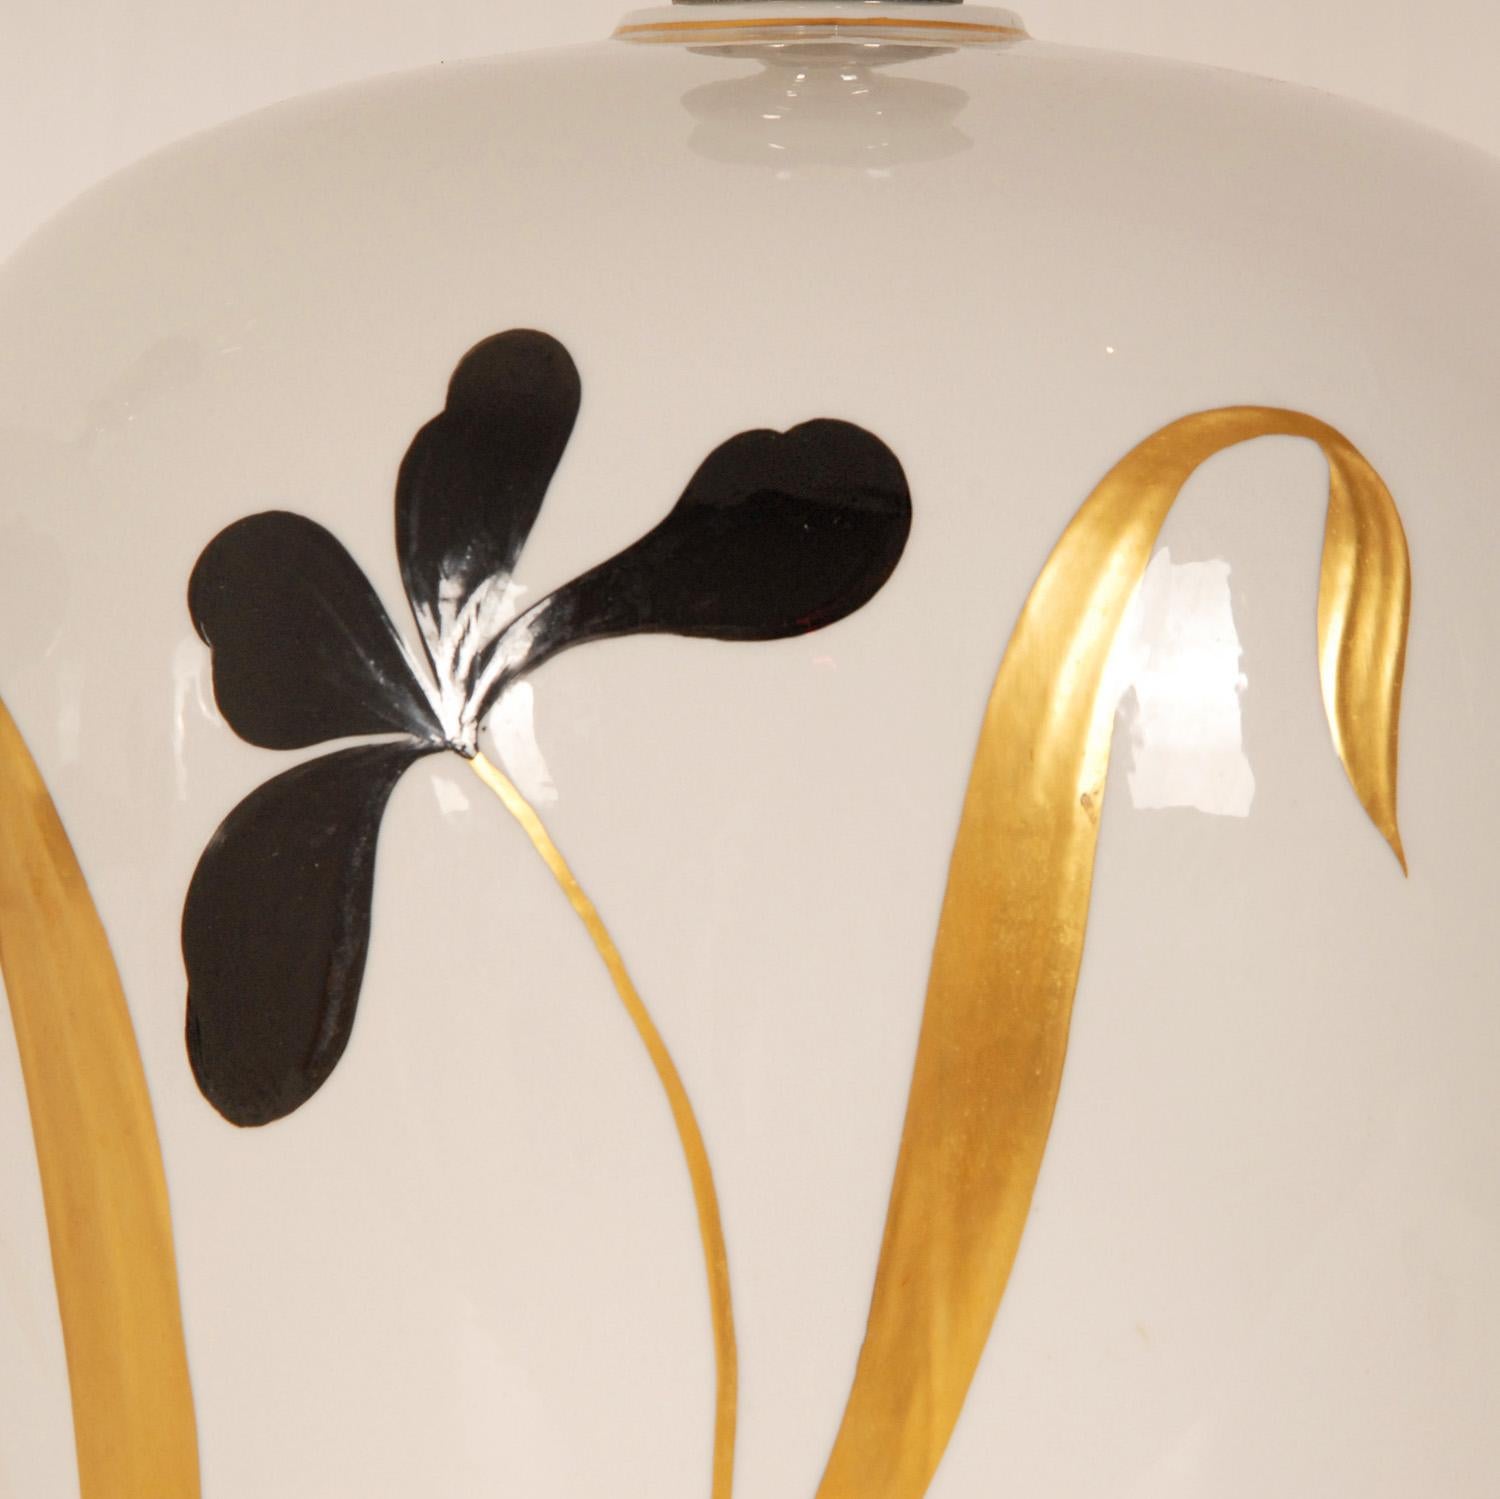 Vintage 1970s Italian Ceramic Vase Lamps Gold Black White Porcelain, a Pair For Sale 4